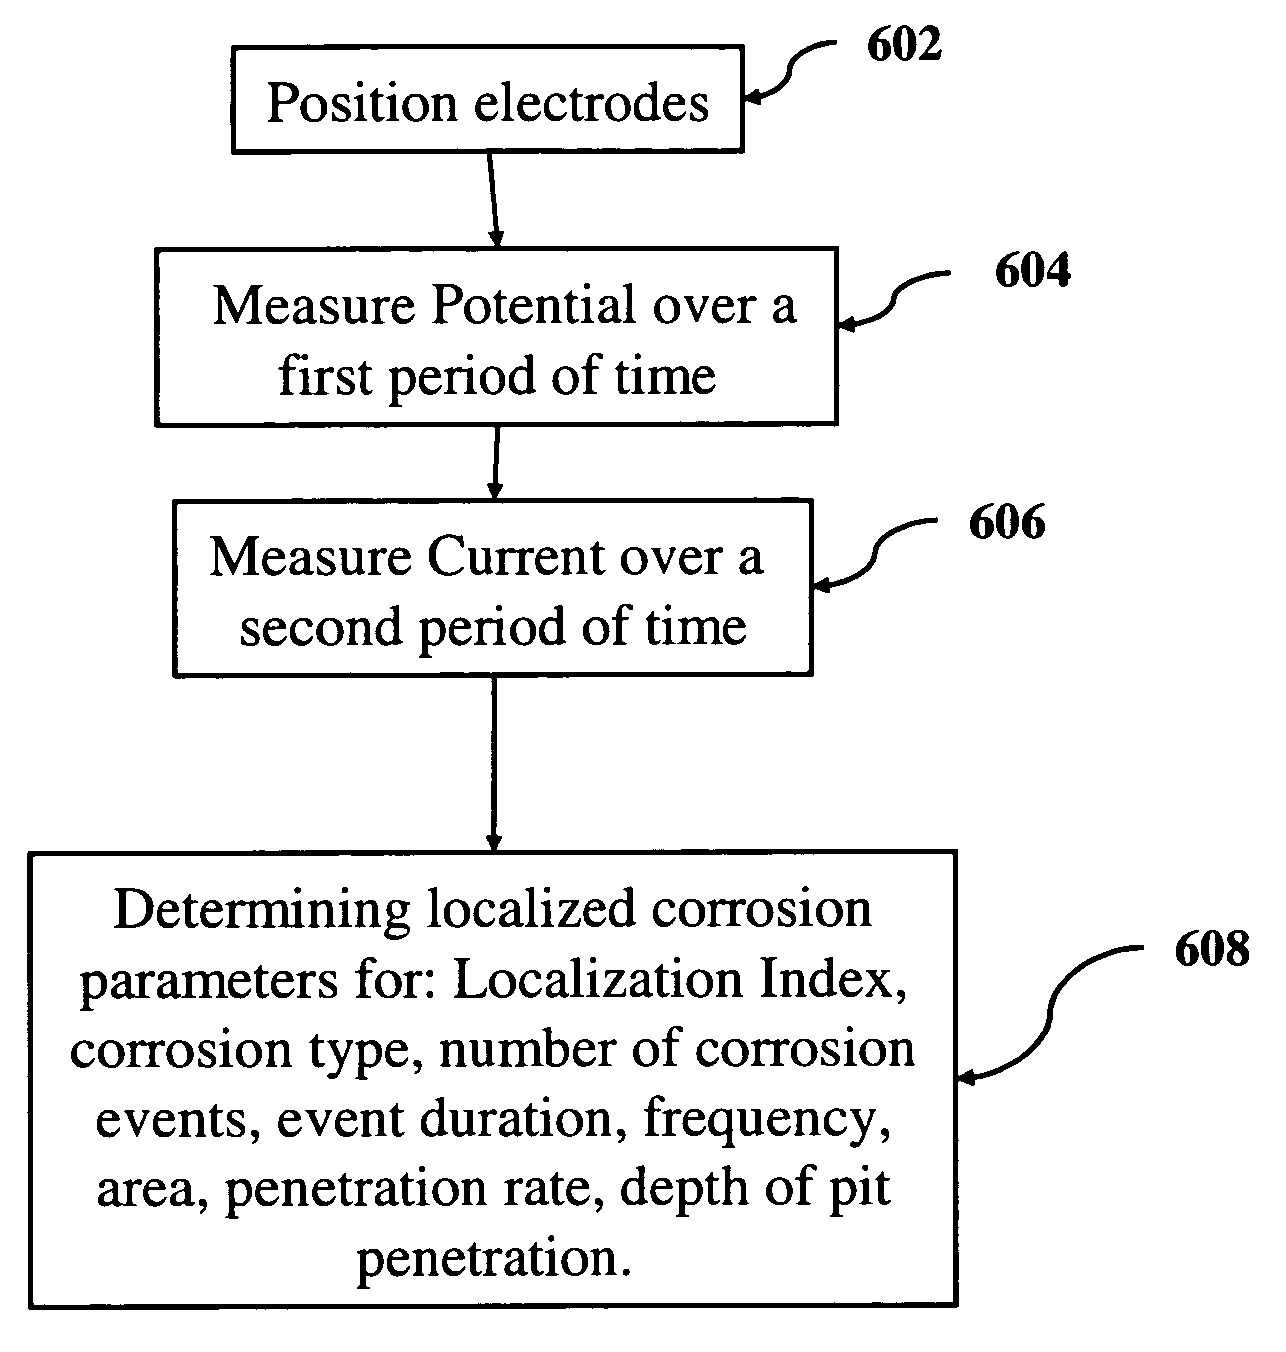 Quantitative transient analysis of localized corrosion